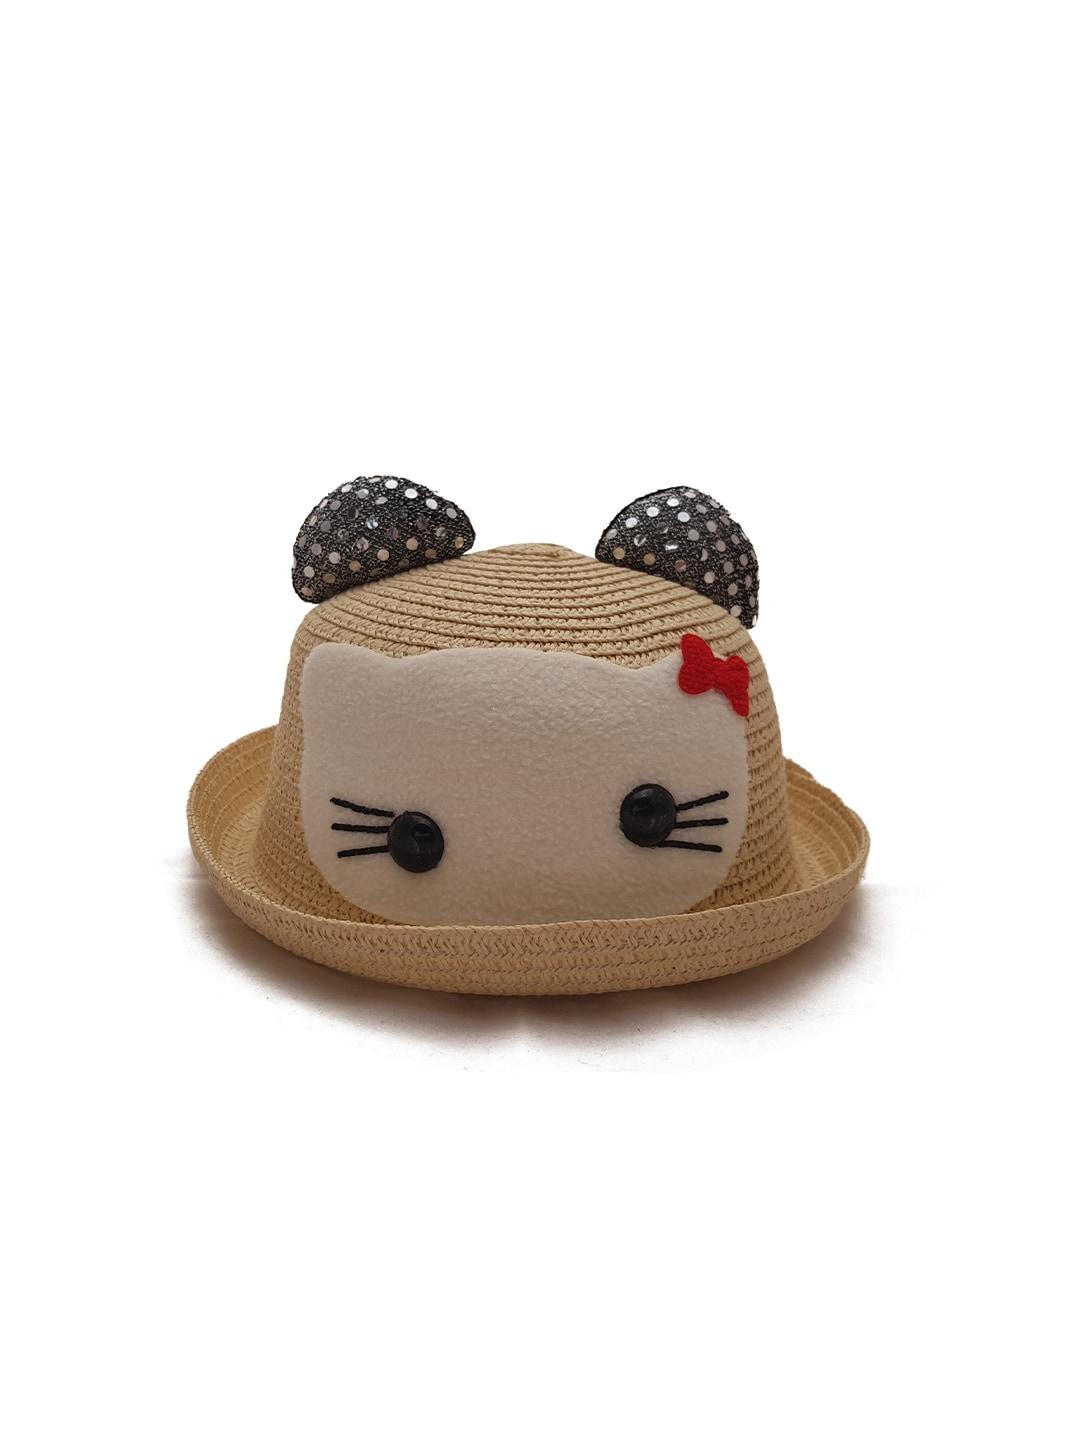 jenna-boys-cat-applique-detail-straw-hat